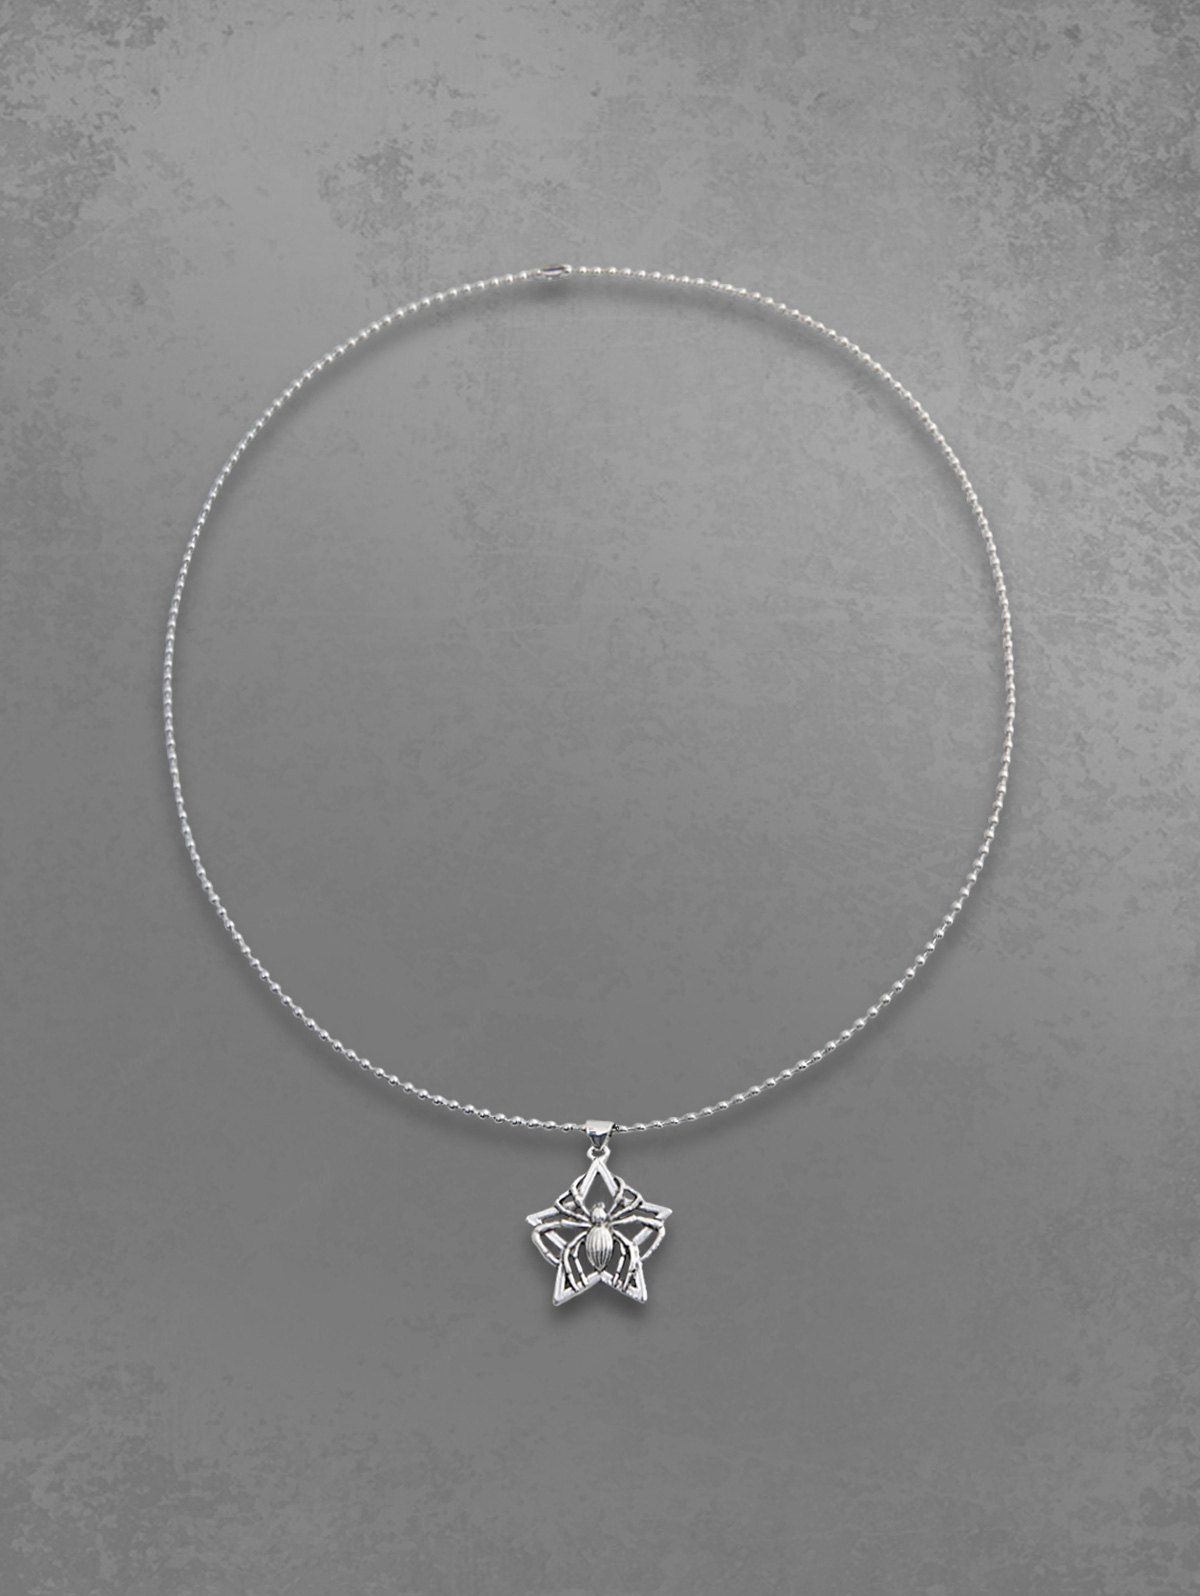 Pentagram Star Spider Pendant Necklace